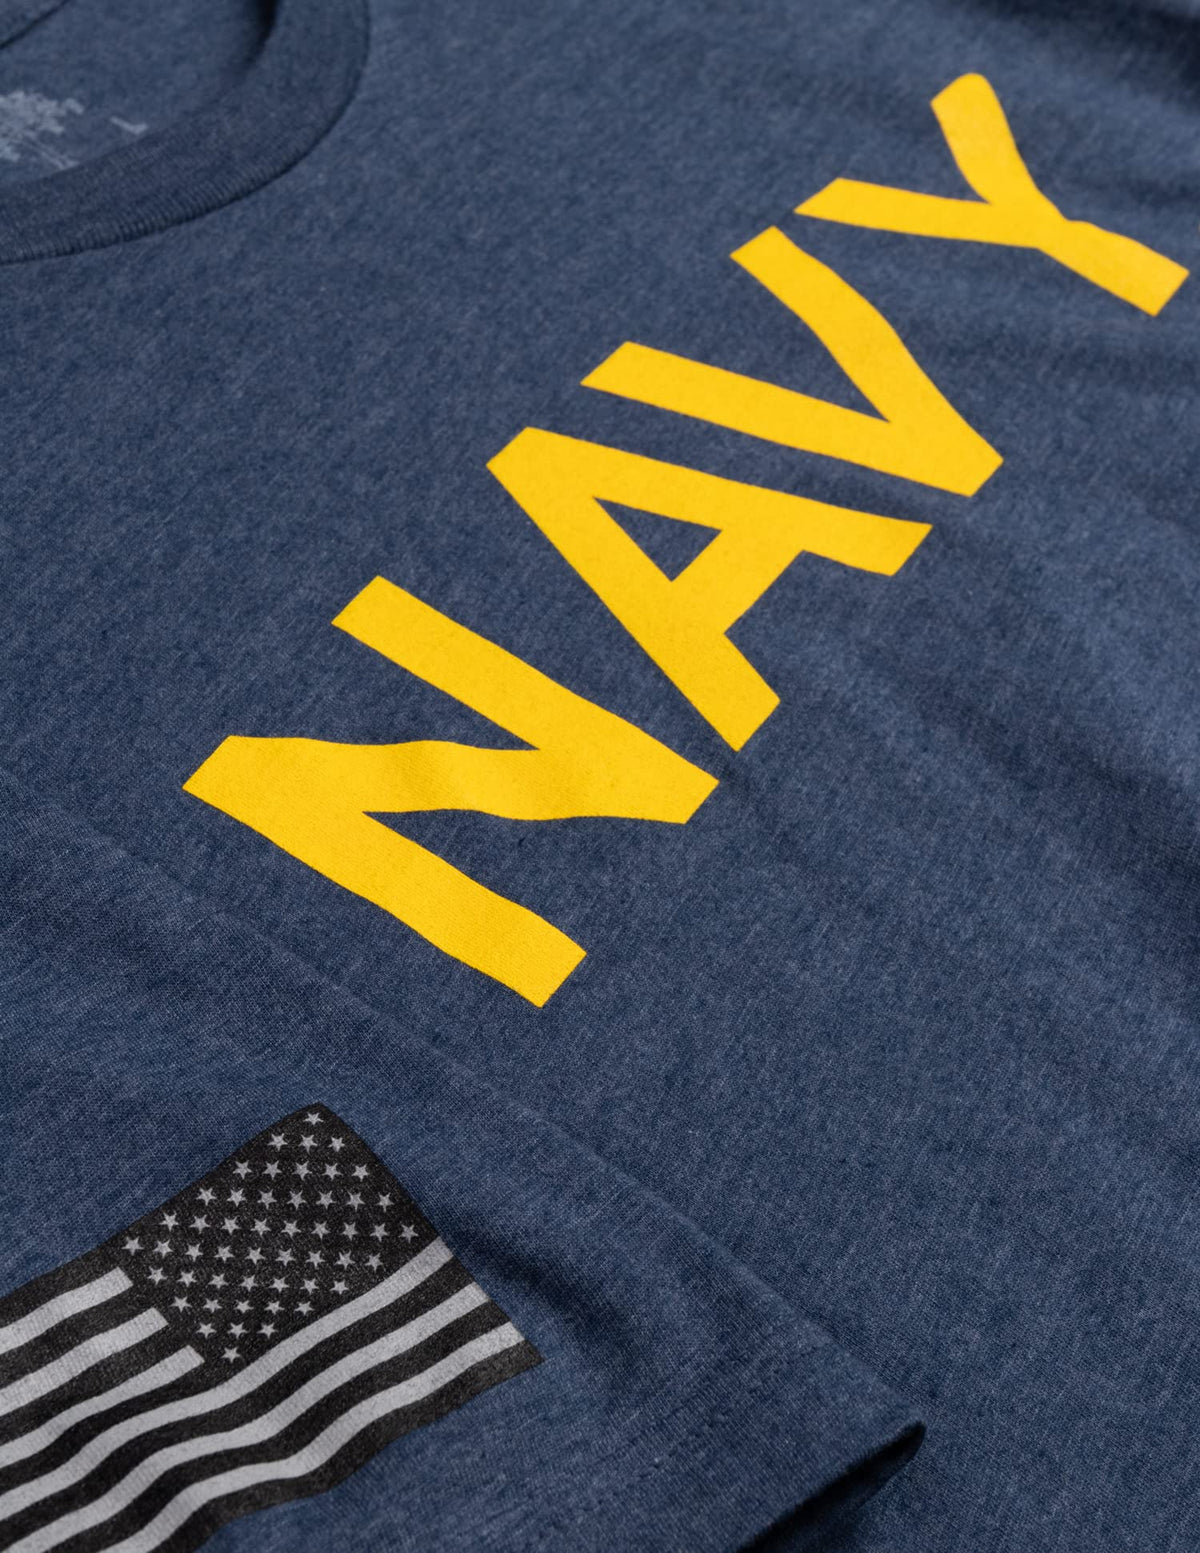 USS Dwight D. Eisenhower, CVN-69 | U.S. Navy Sailor Veteran USN United States Naval T-shirt for Men Women